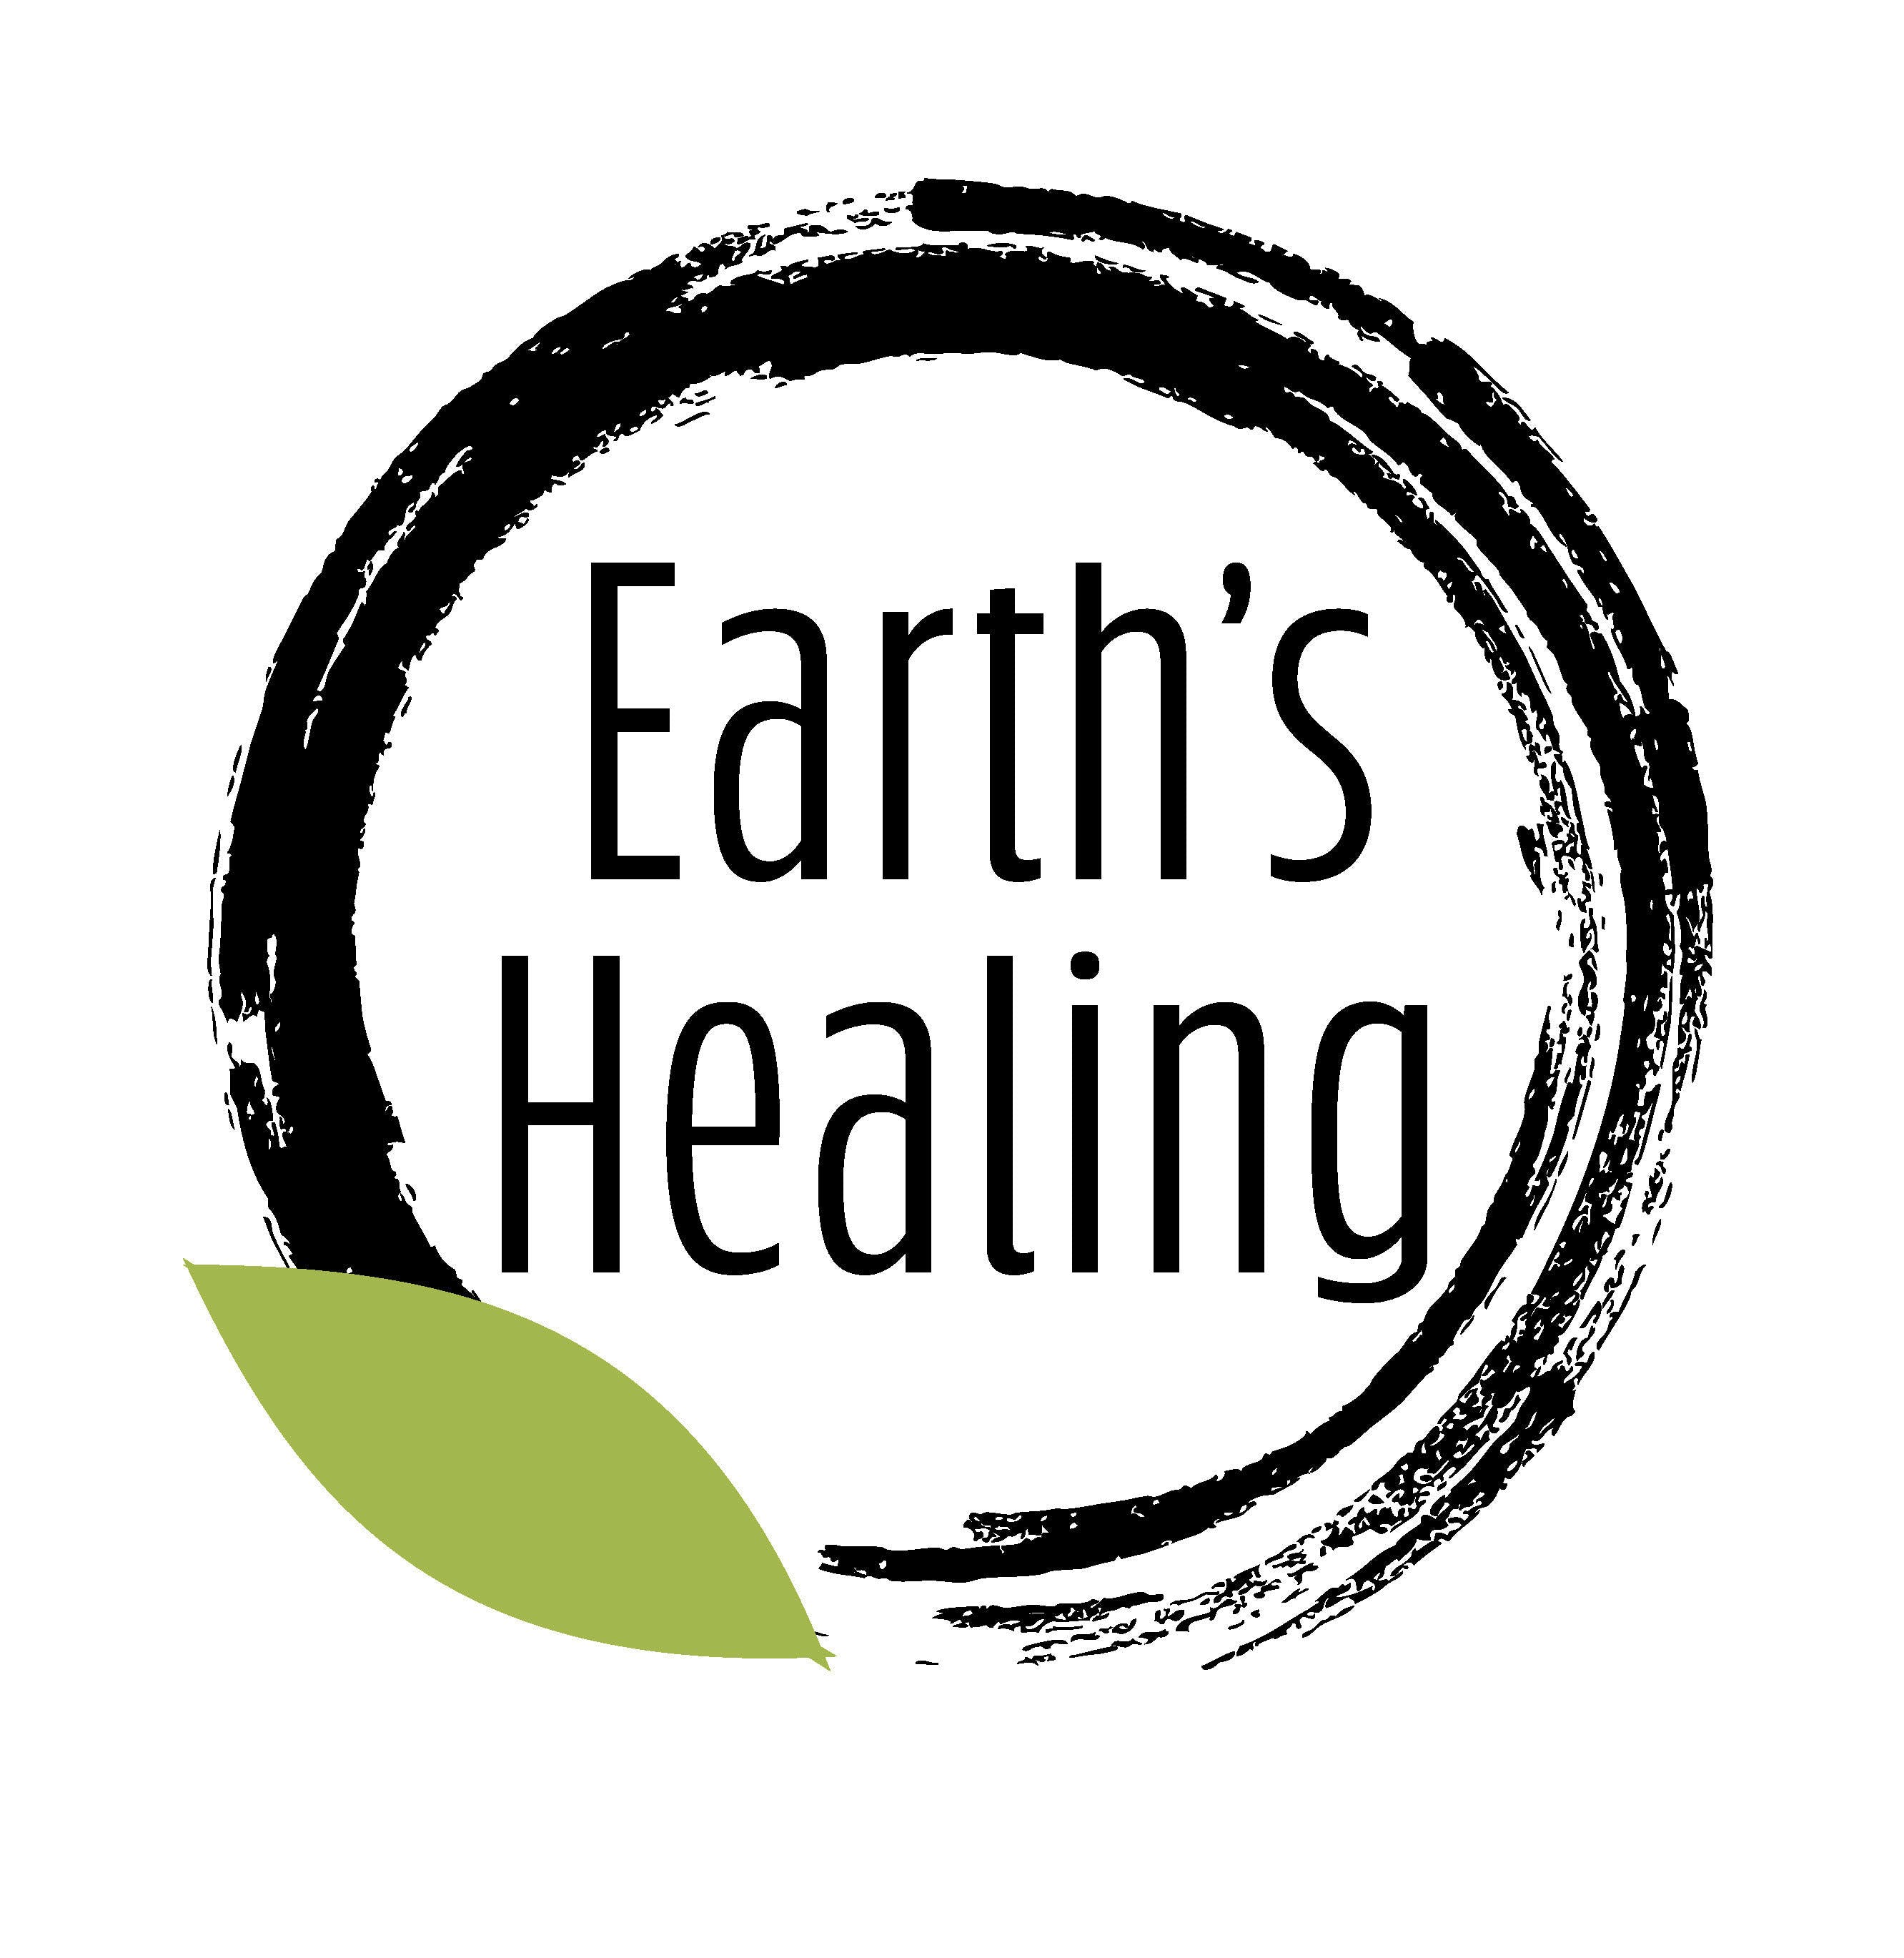 Earth's Healing - Medical Marijuana Doctors - Cannabizme.com